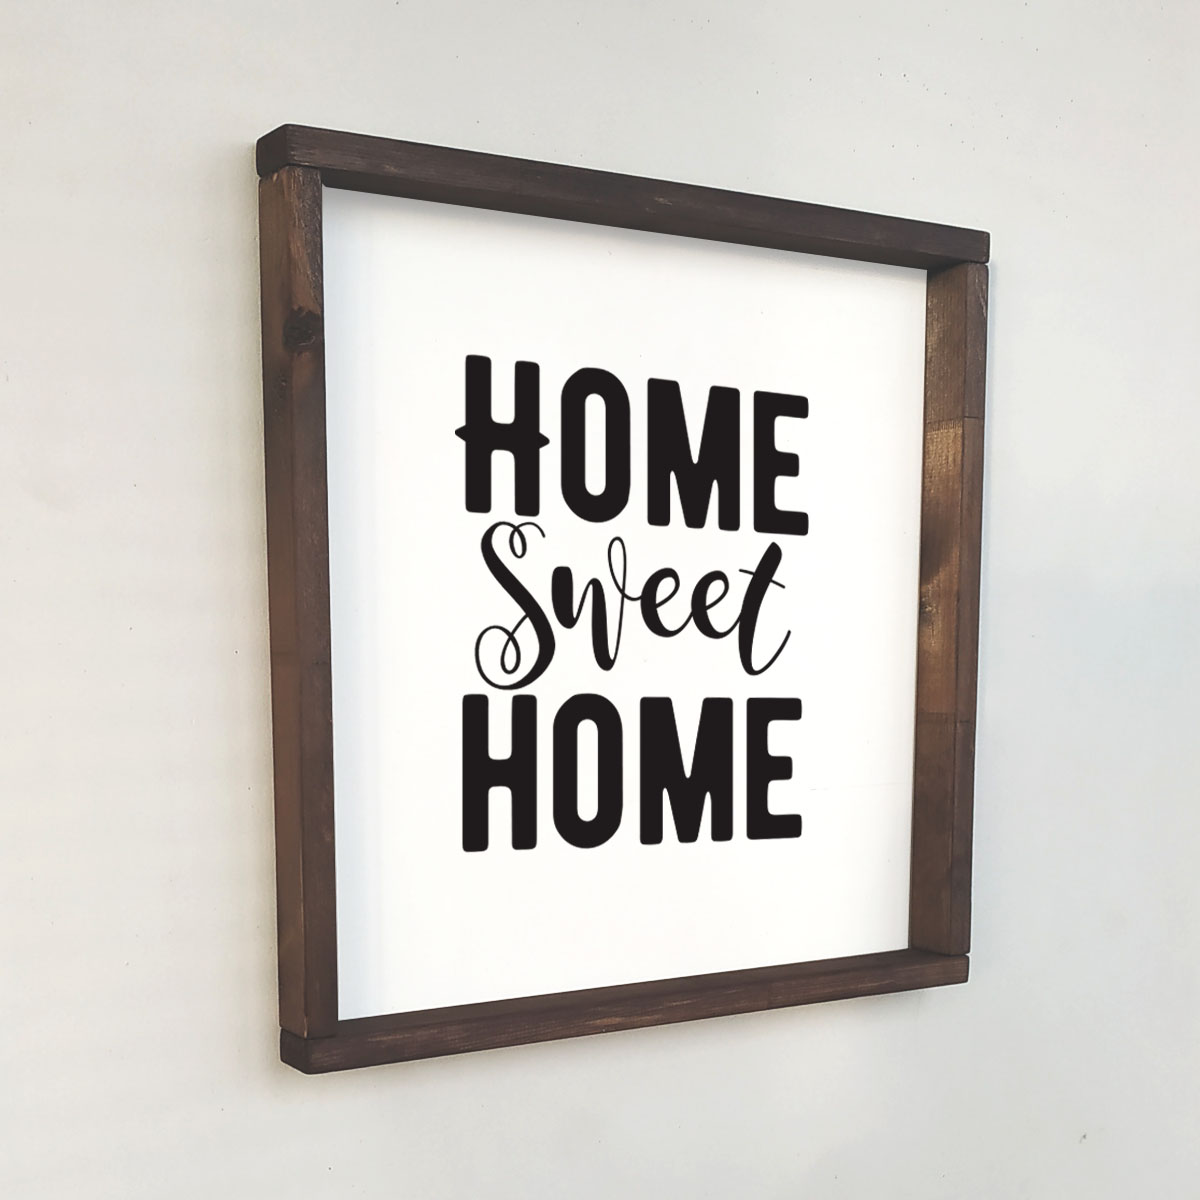 Квадратное панно с надписью HOME SWEET HOME - иллюстрация товара №2